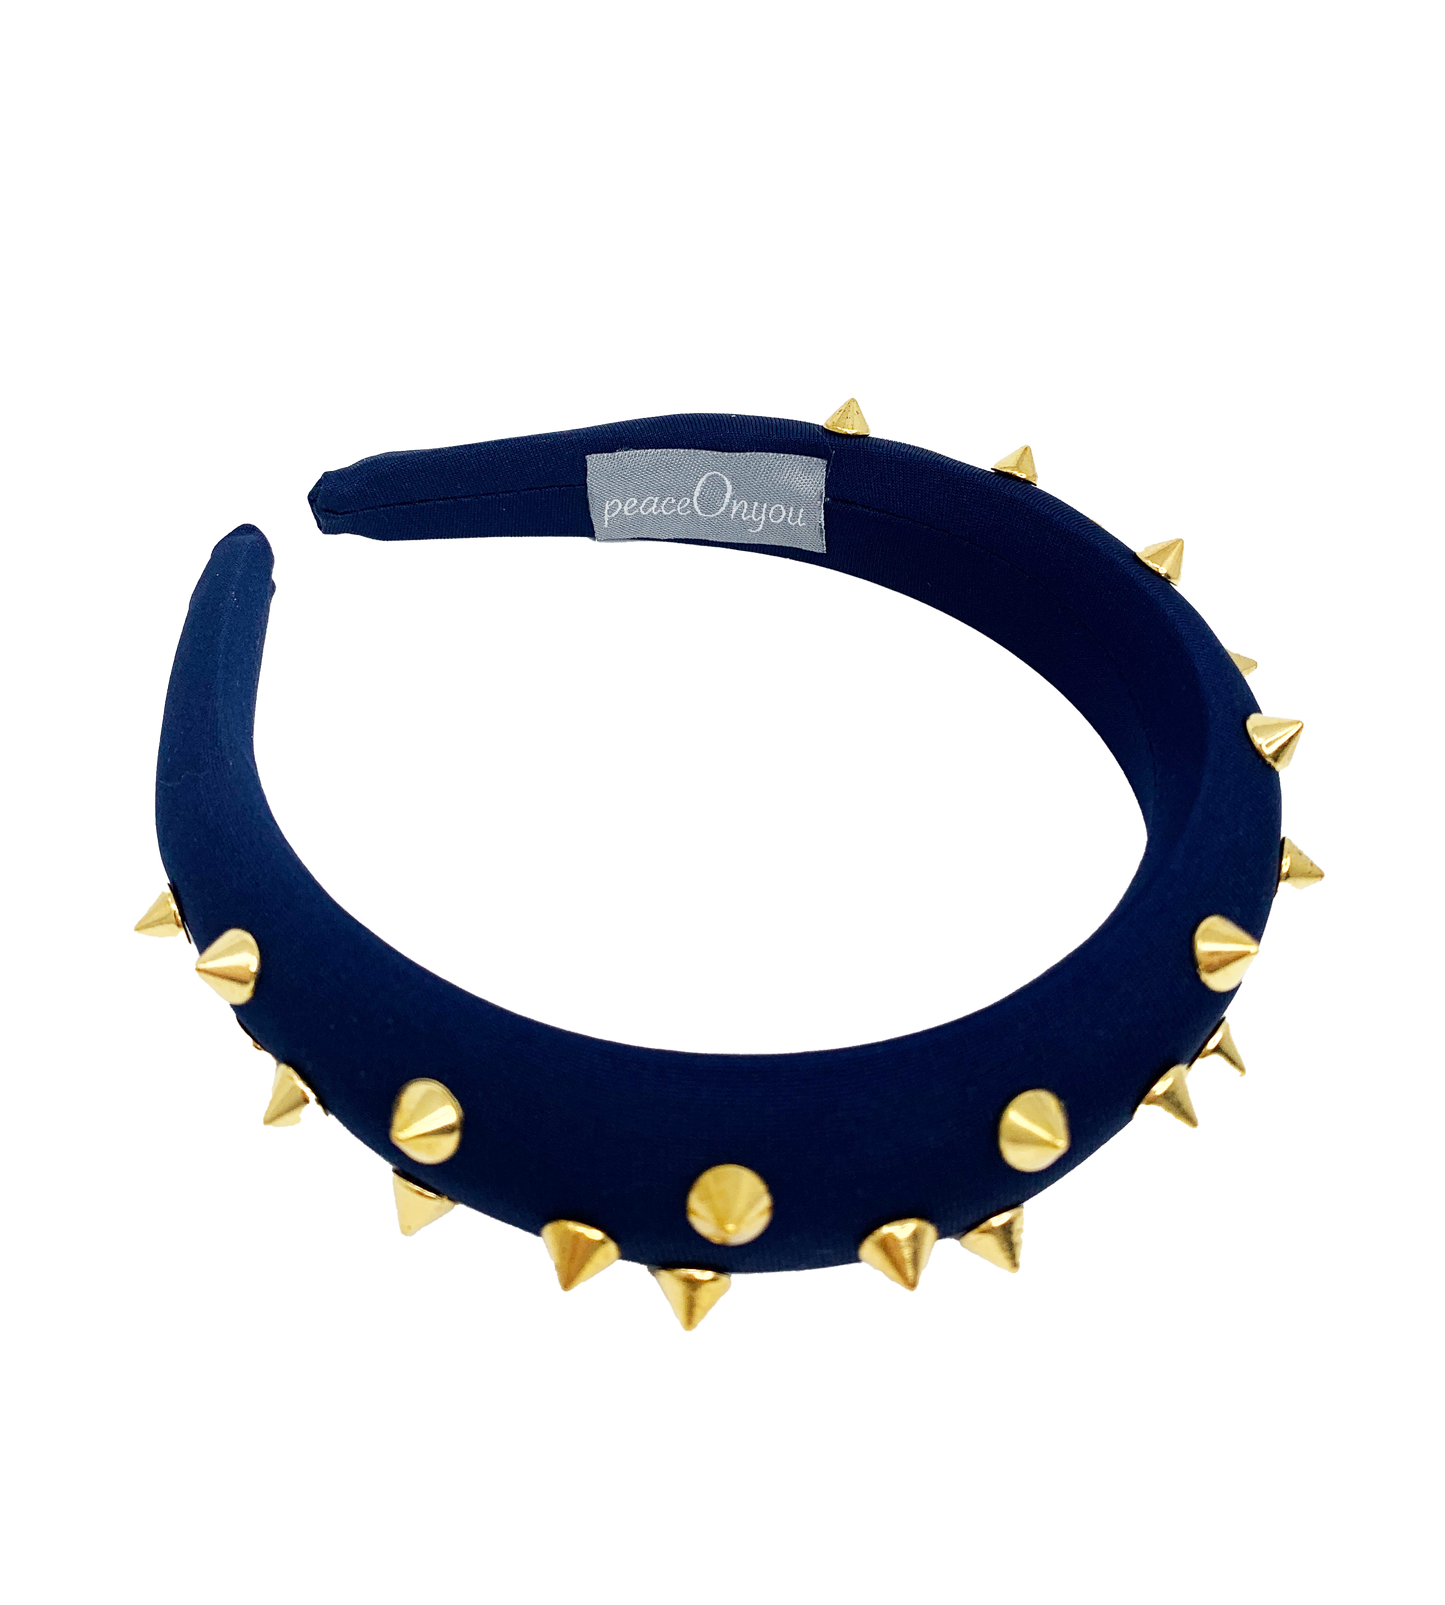 Dark blue padded headband with gold spikes